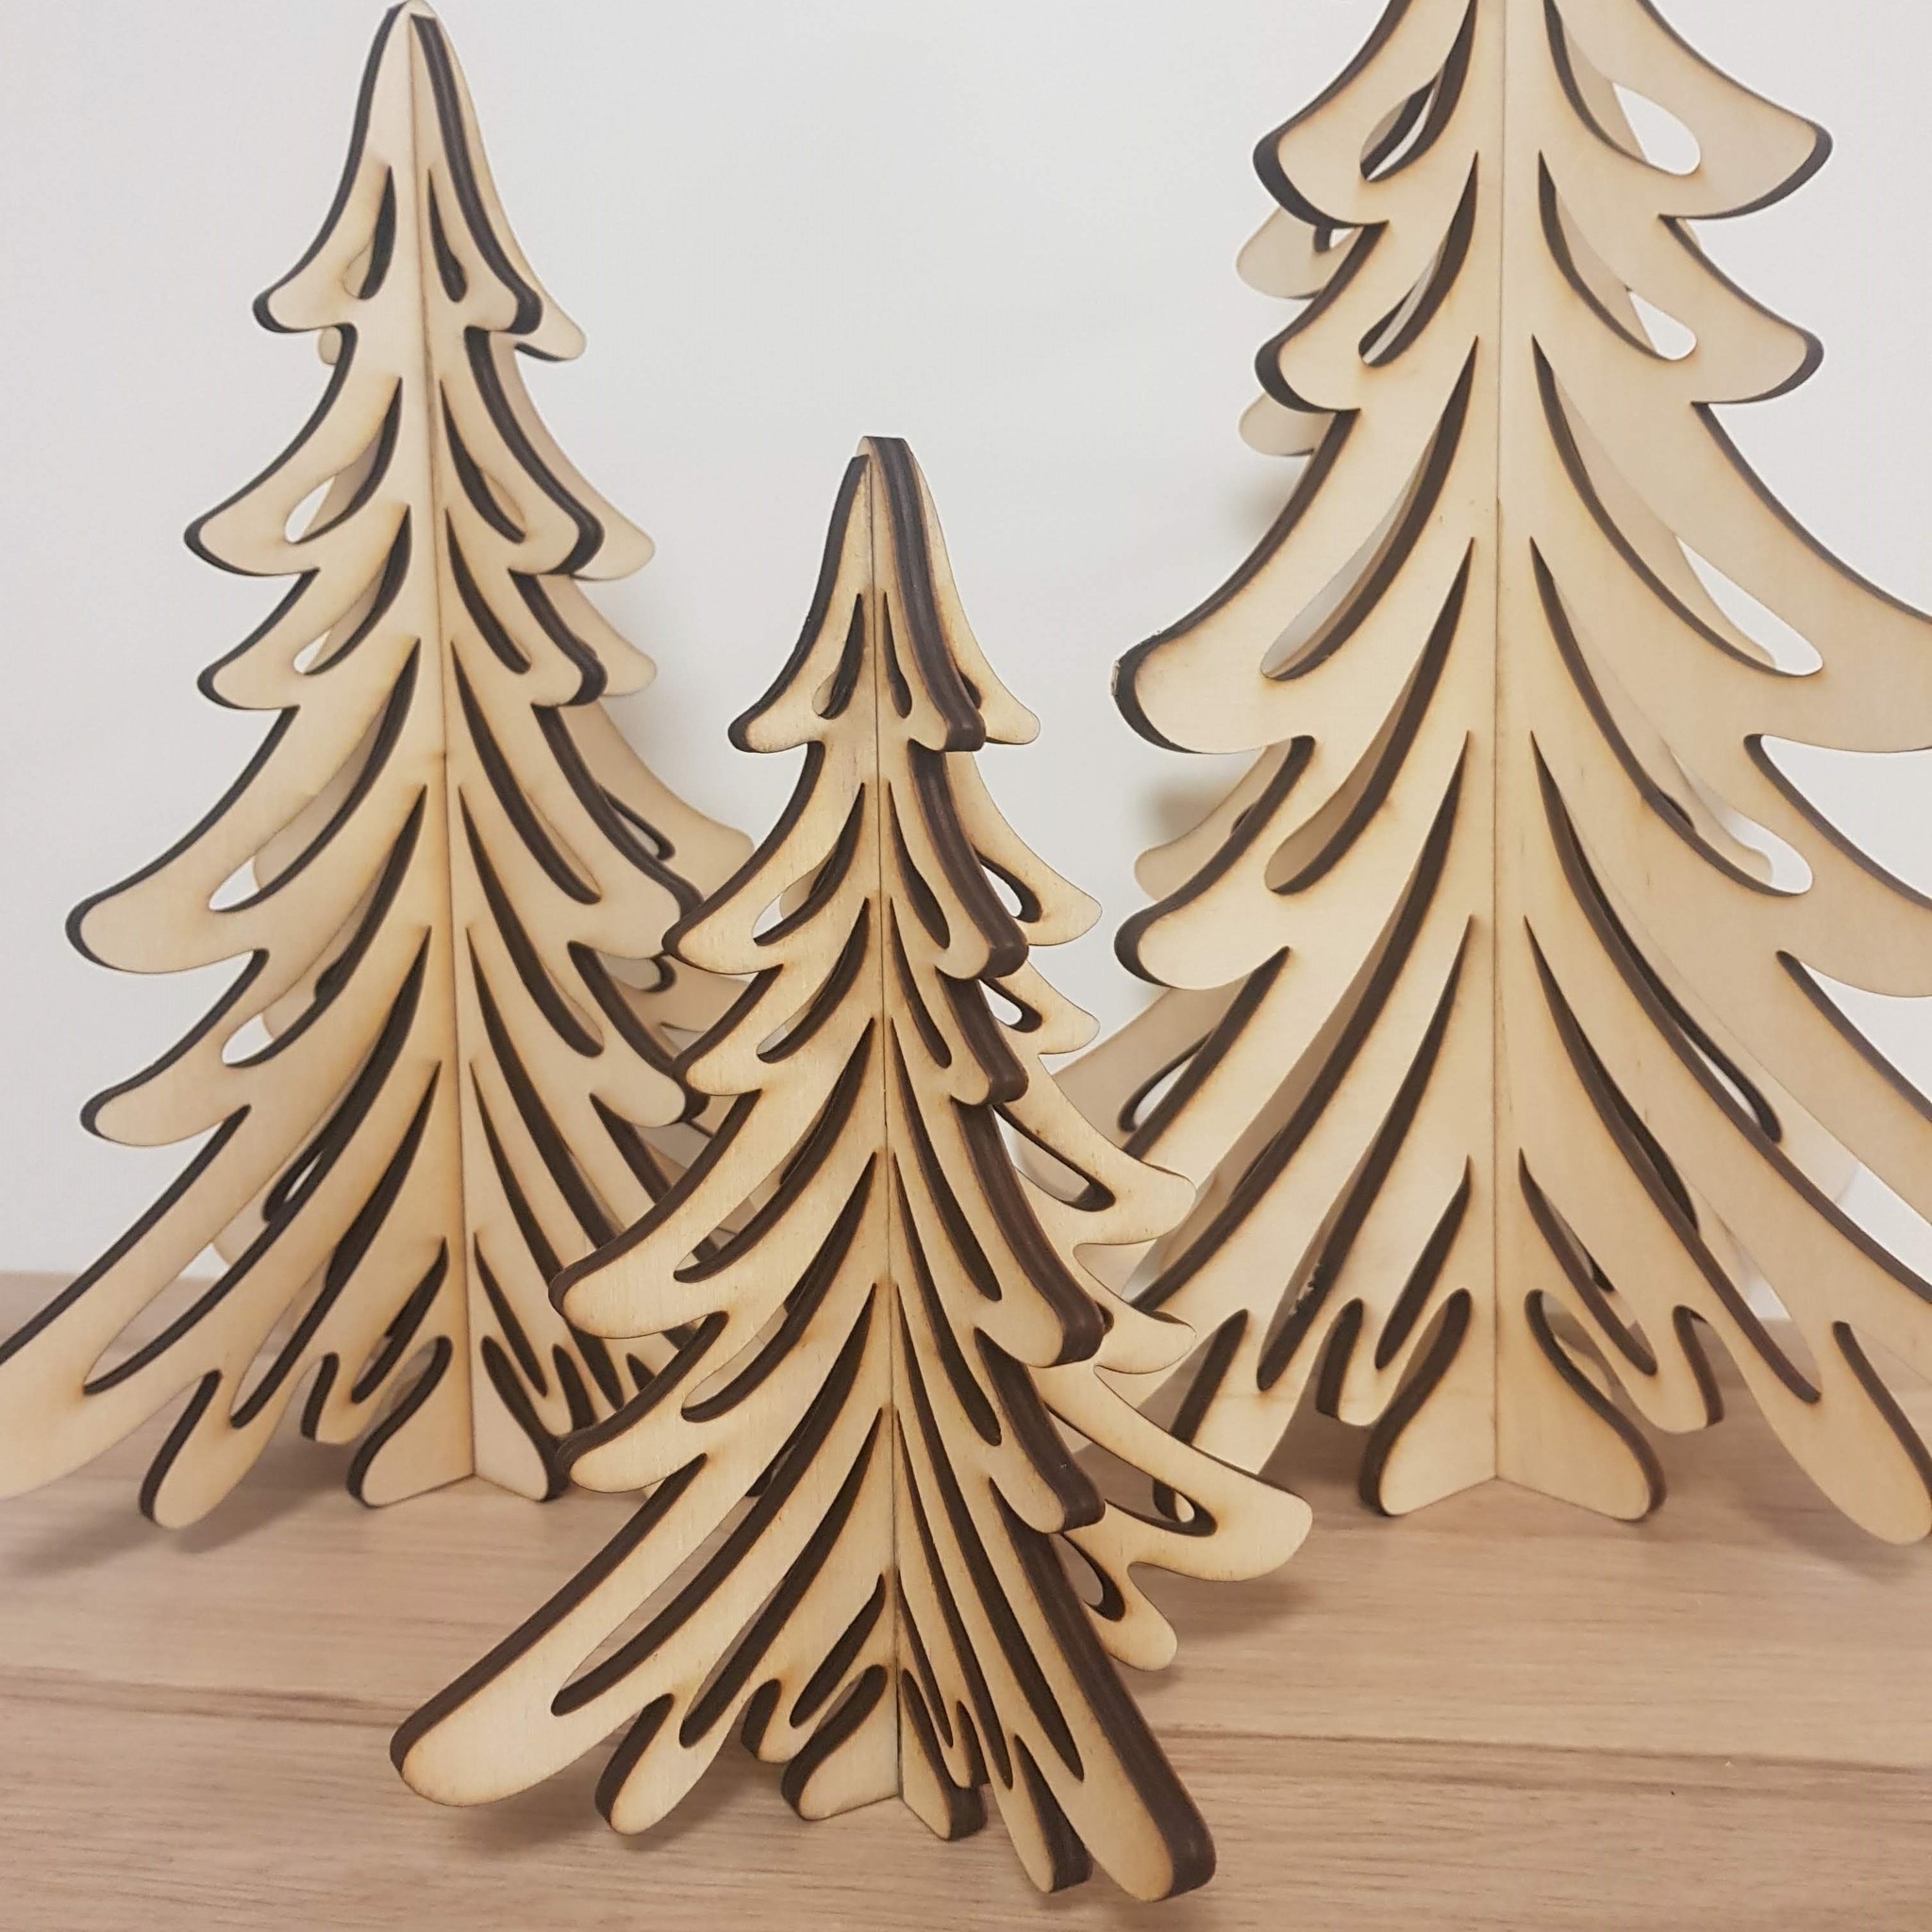 Kerstboom uit hout